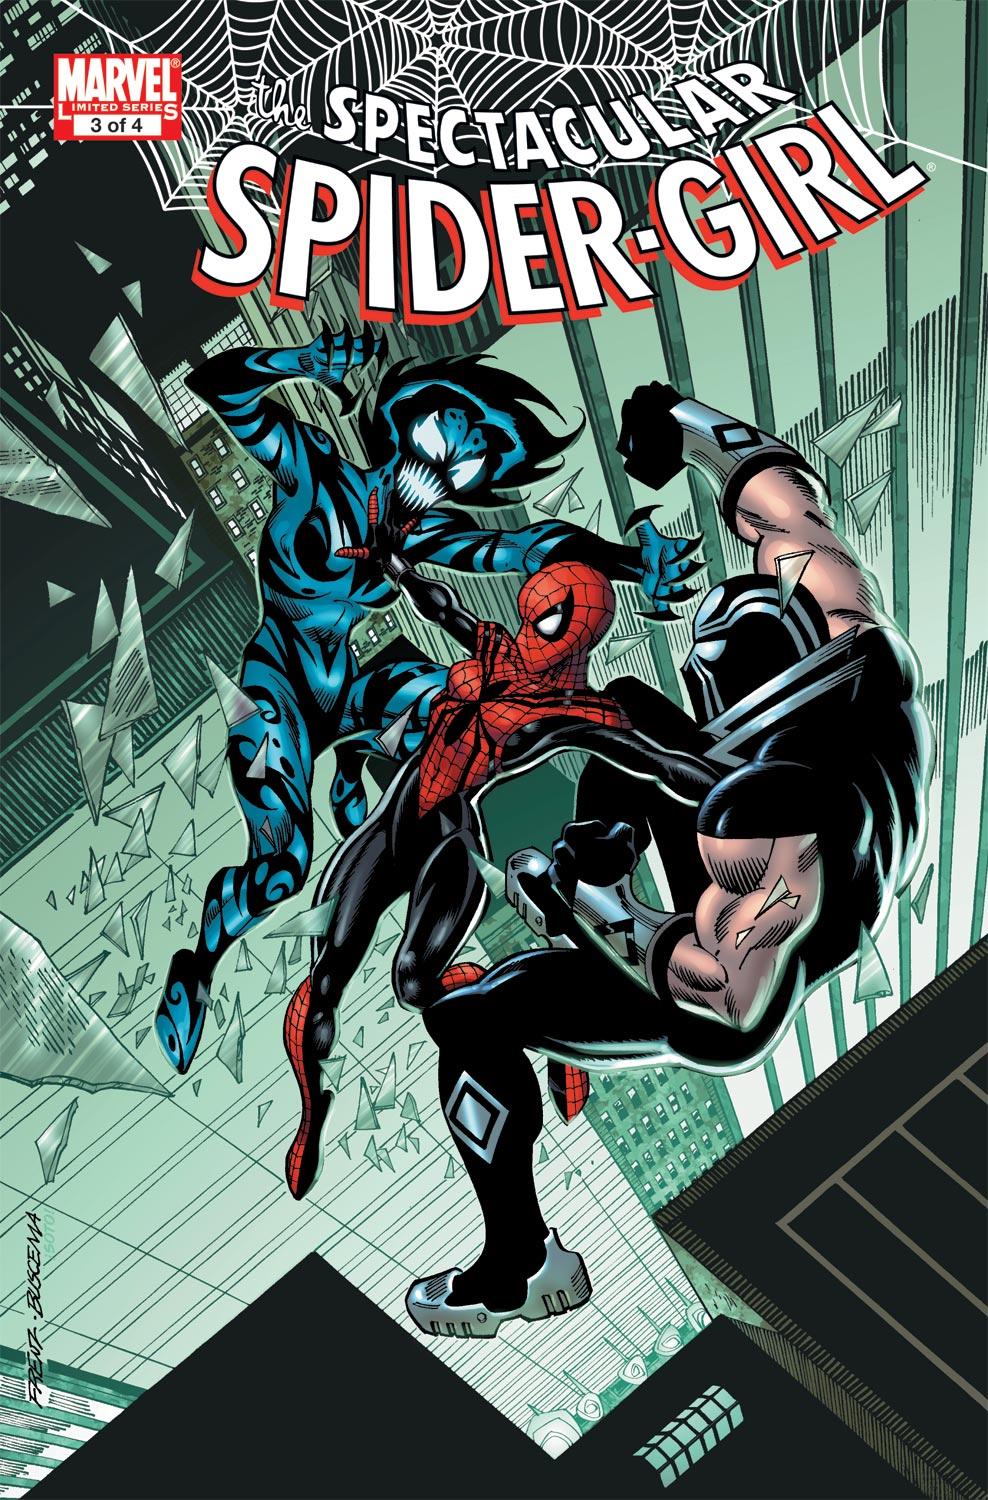 Spectacular Spider-Girl (2010) #3